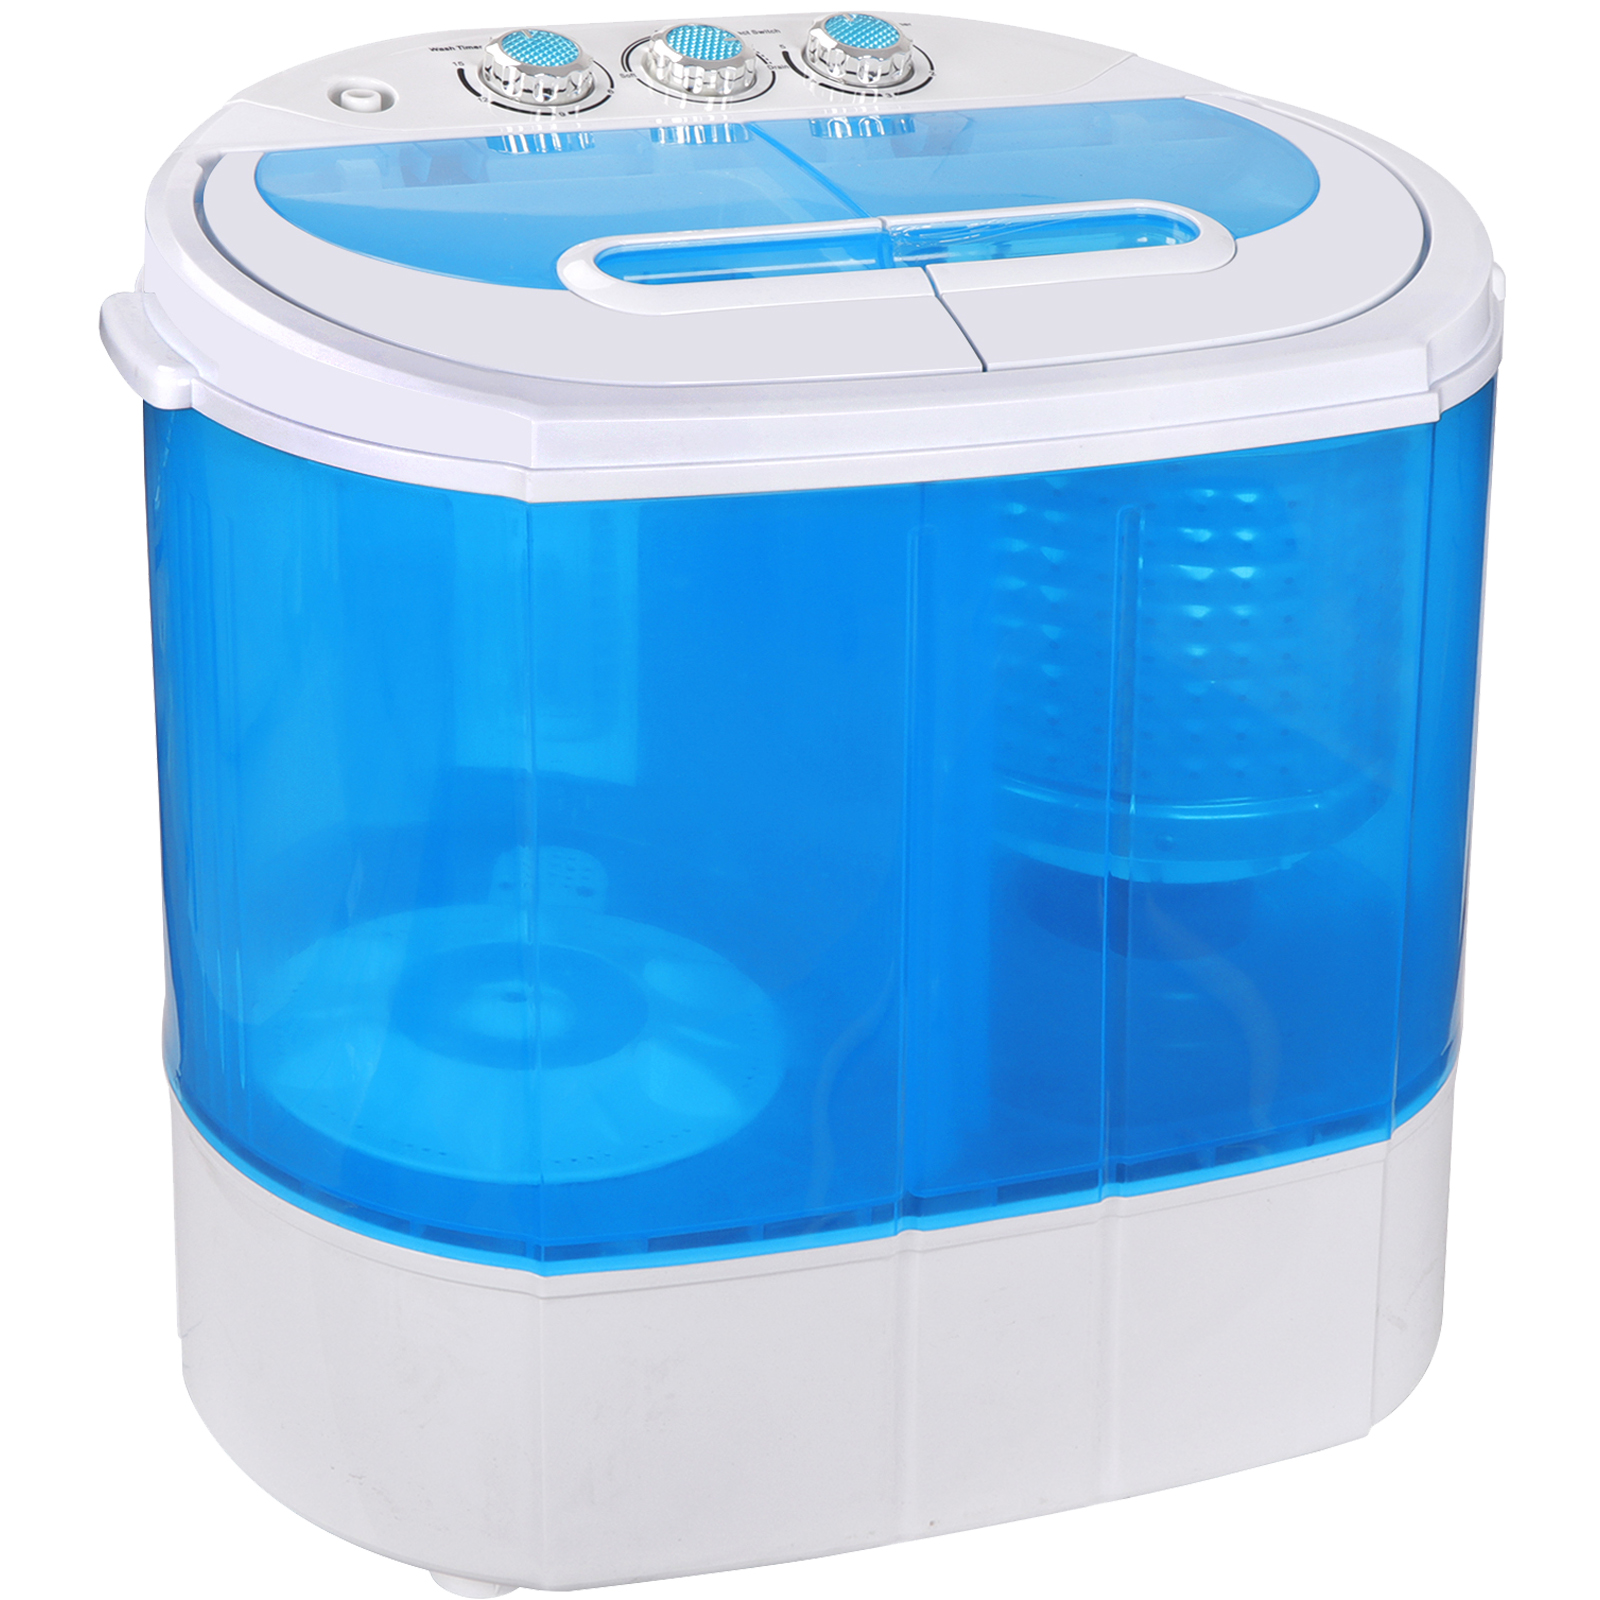 ZENY Portable Washing Machine Mini Twin Tub Washing Machine with Washer & Spinner, Gravity Drain Pump, 9.9lbs Capacity - image 1 of 10